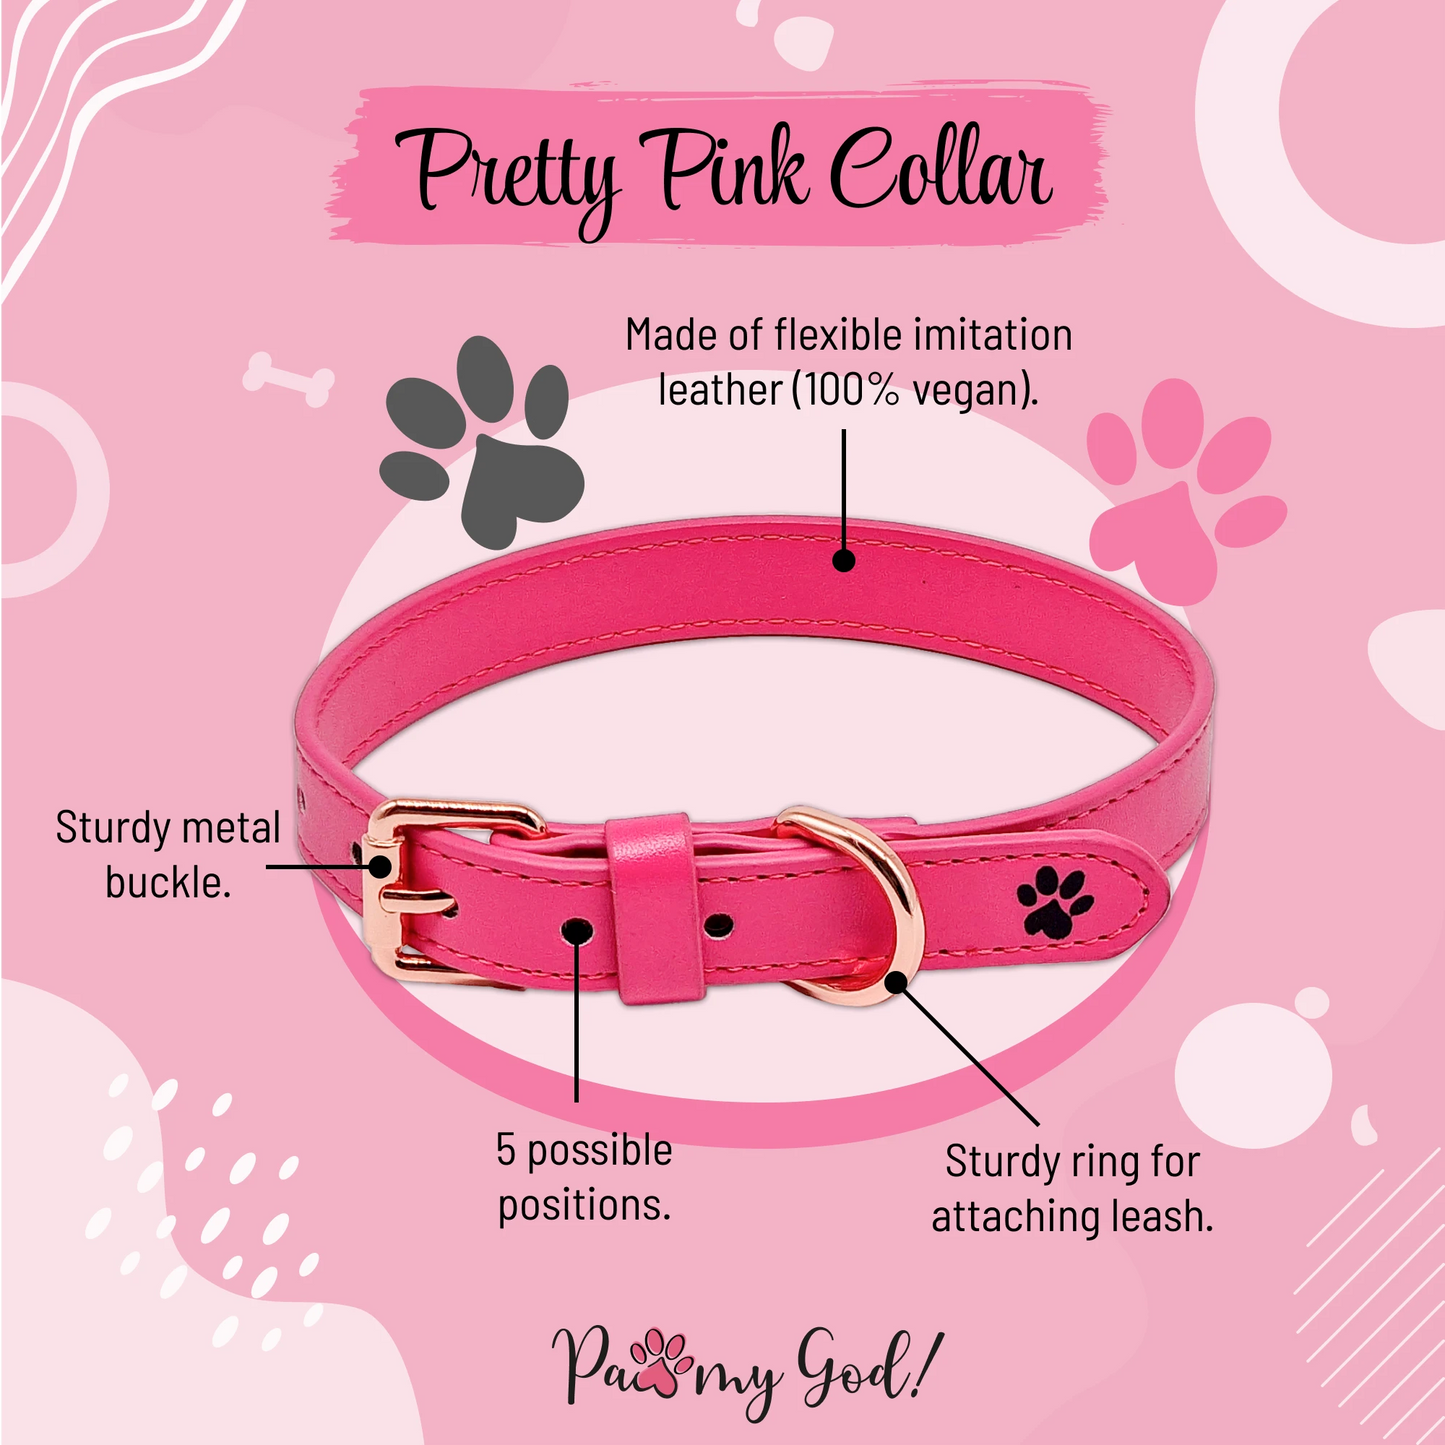 Pretty Pink Collar